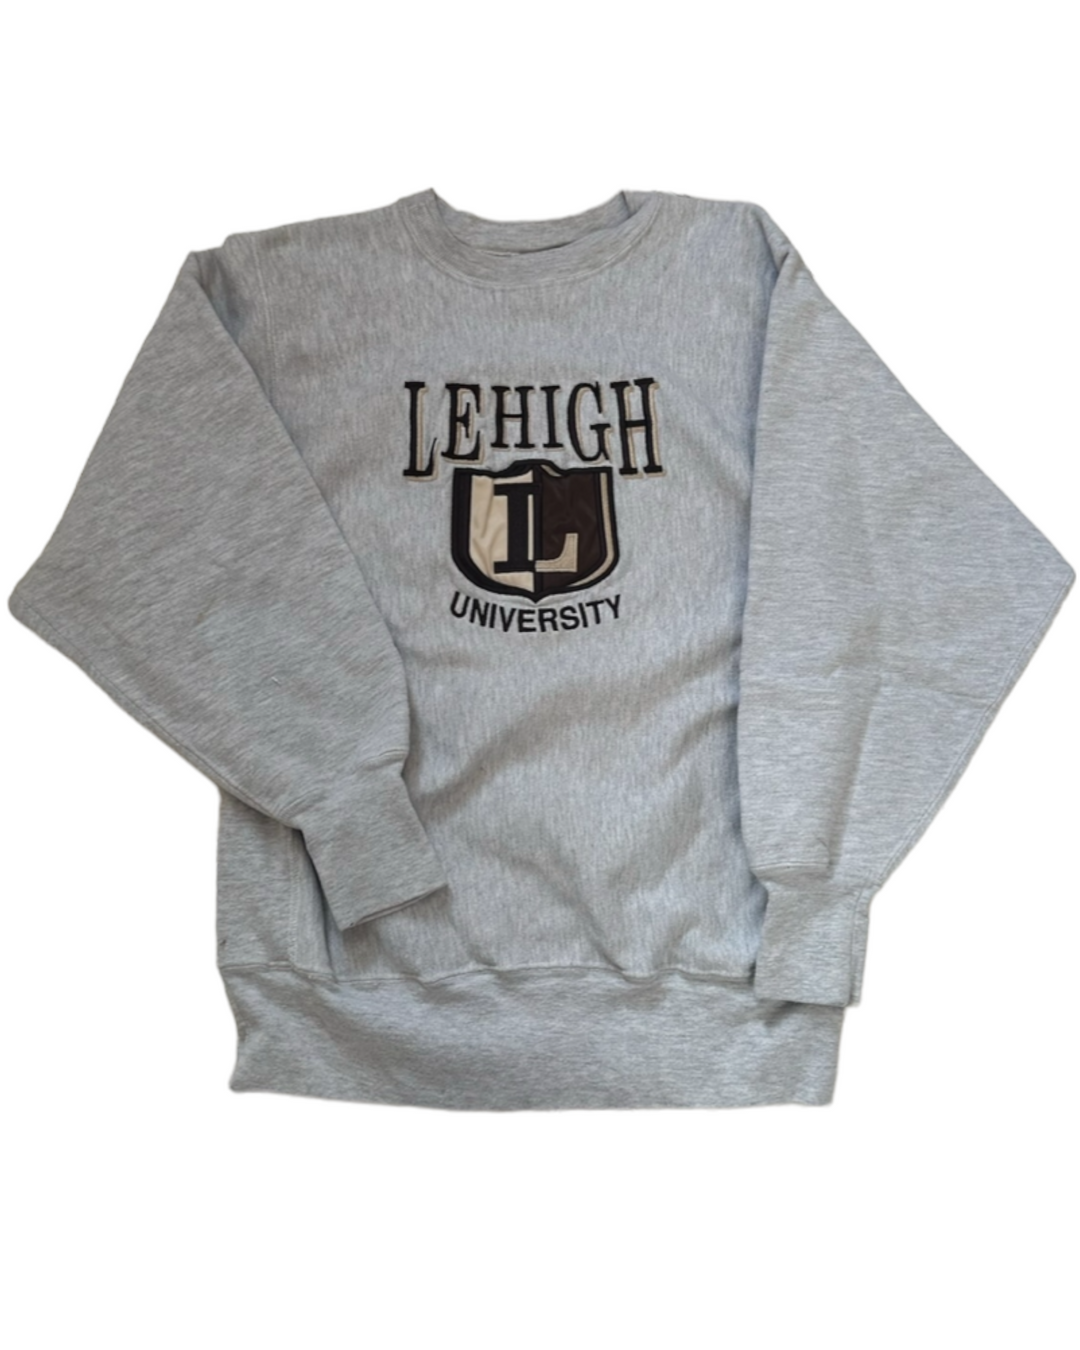 Lehigh Vintage Rare Sweatshirt